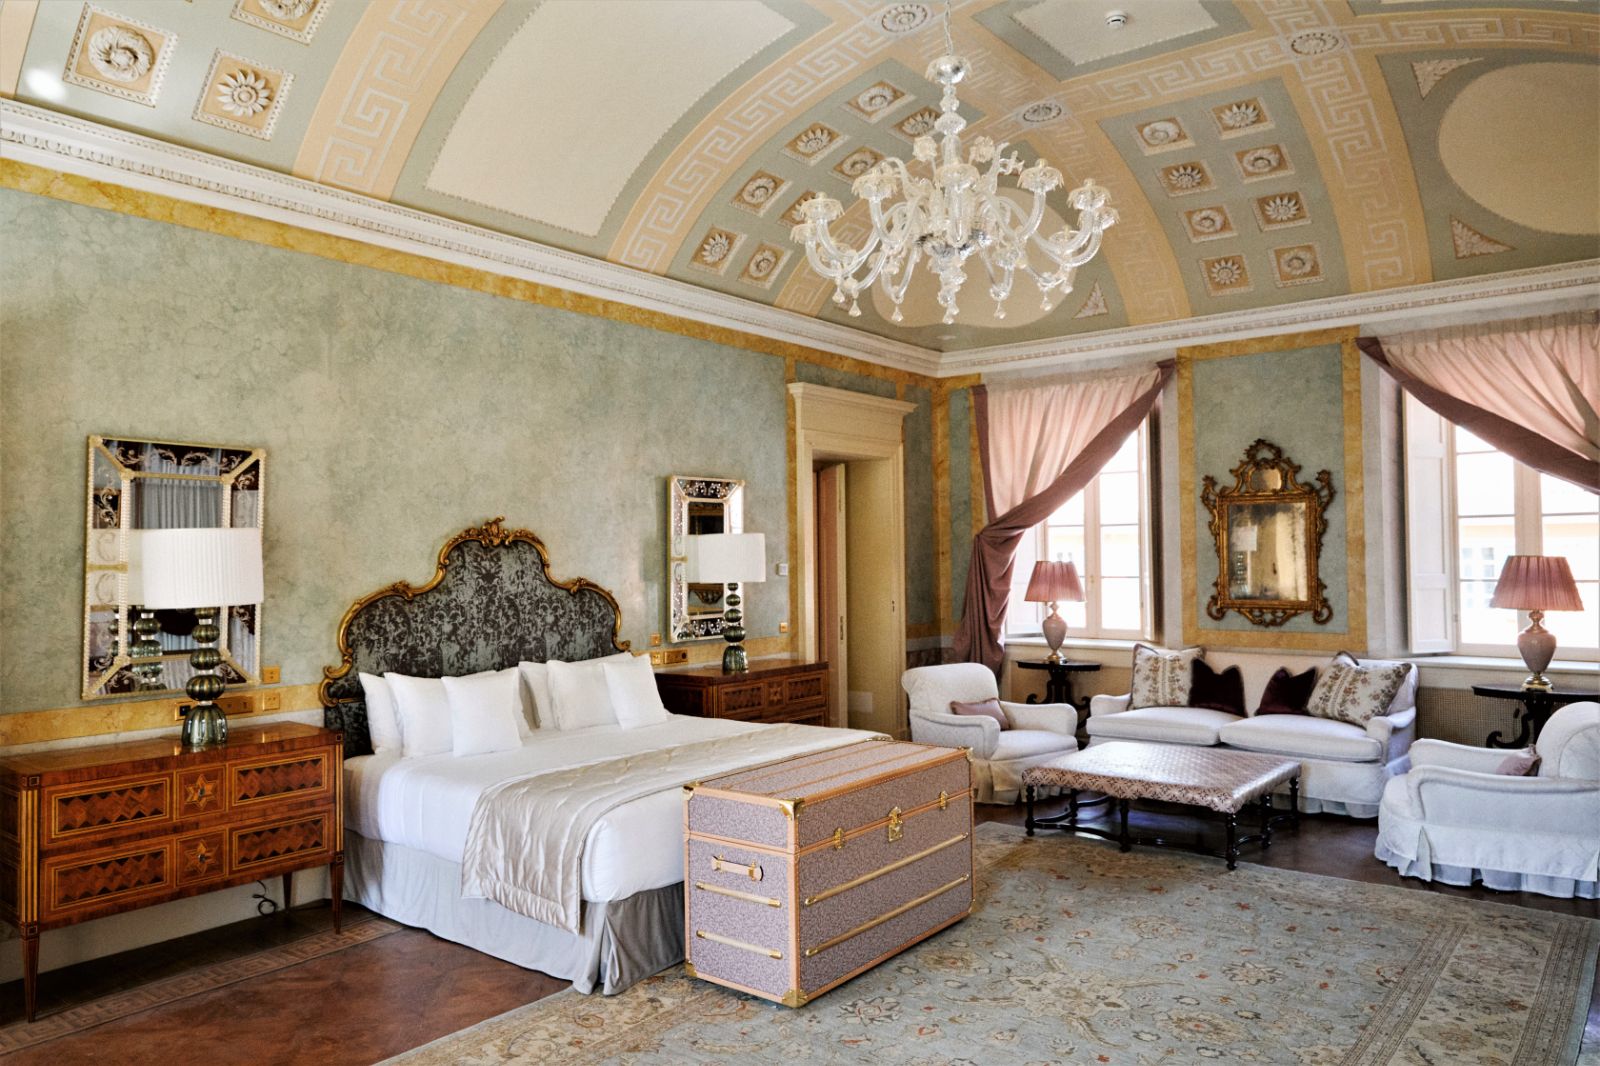 Grand Junior suite at Passalacqua on Italy's Lake Como